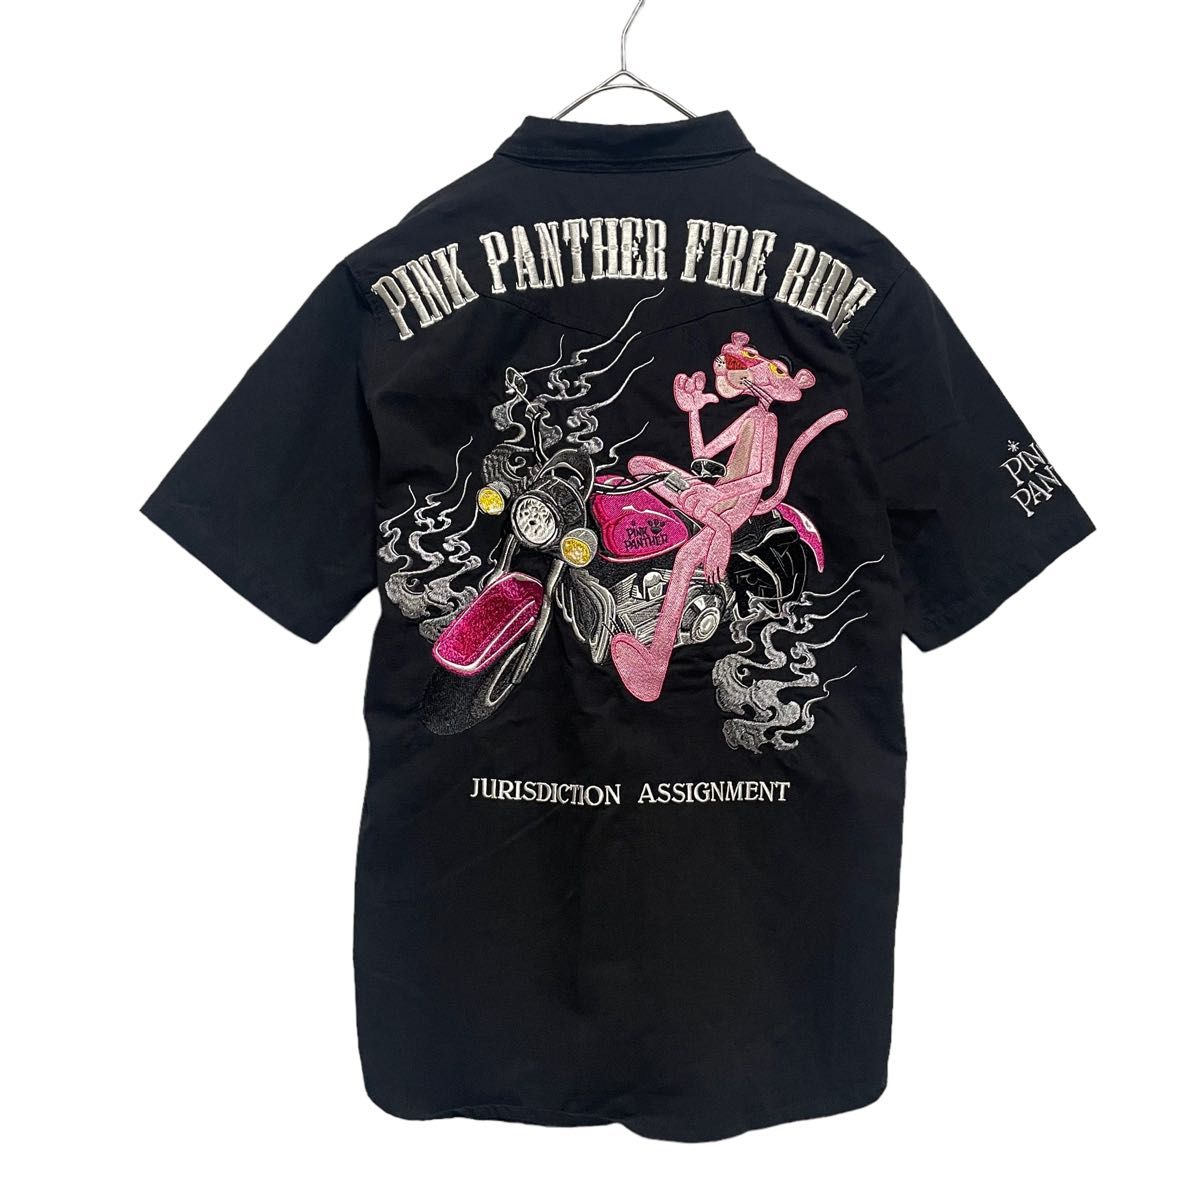 FLAG STAFF フラッグスタッフ ピンクパンサー 刺繍 ワークシャツ L